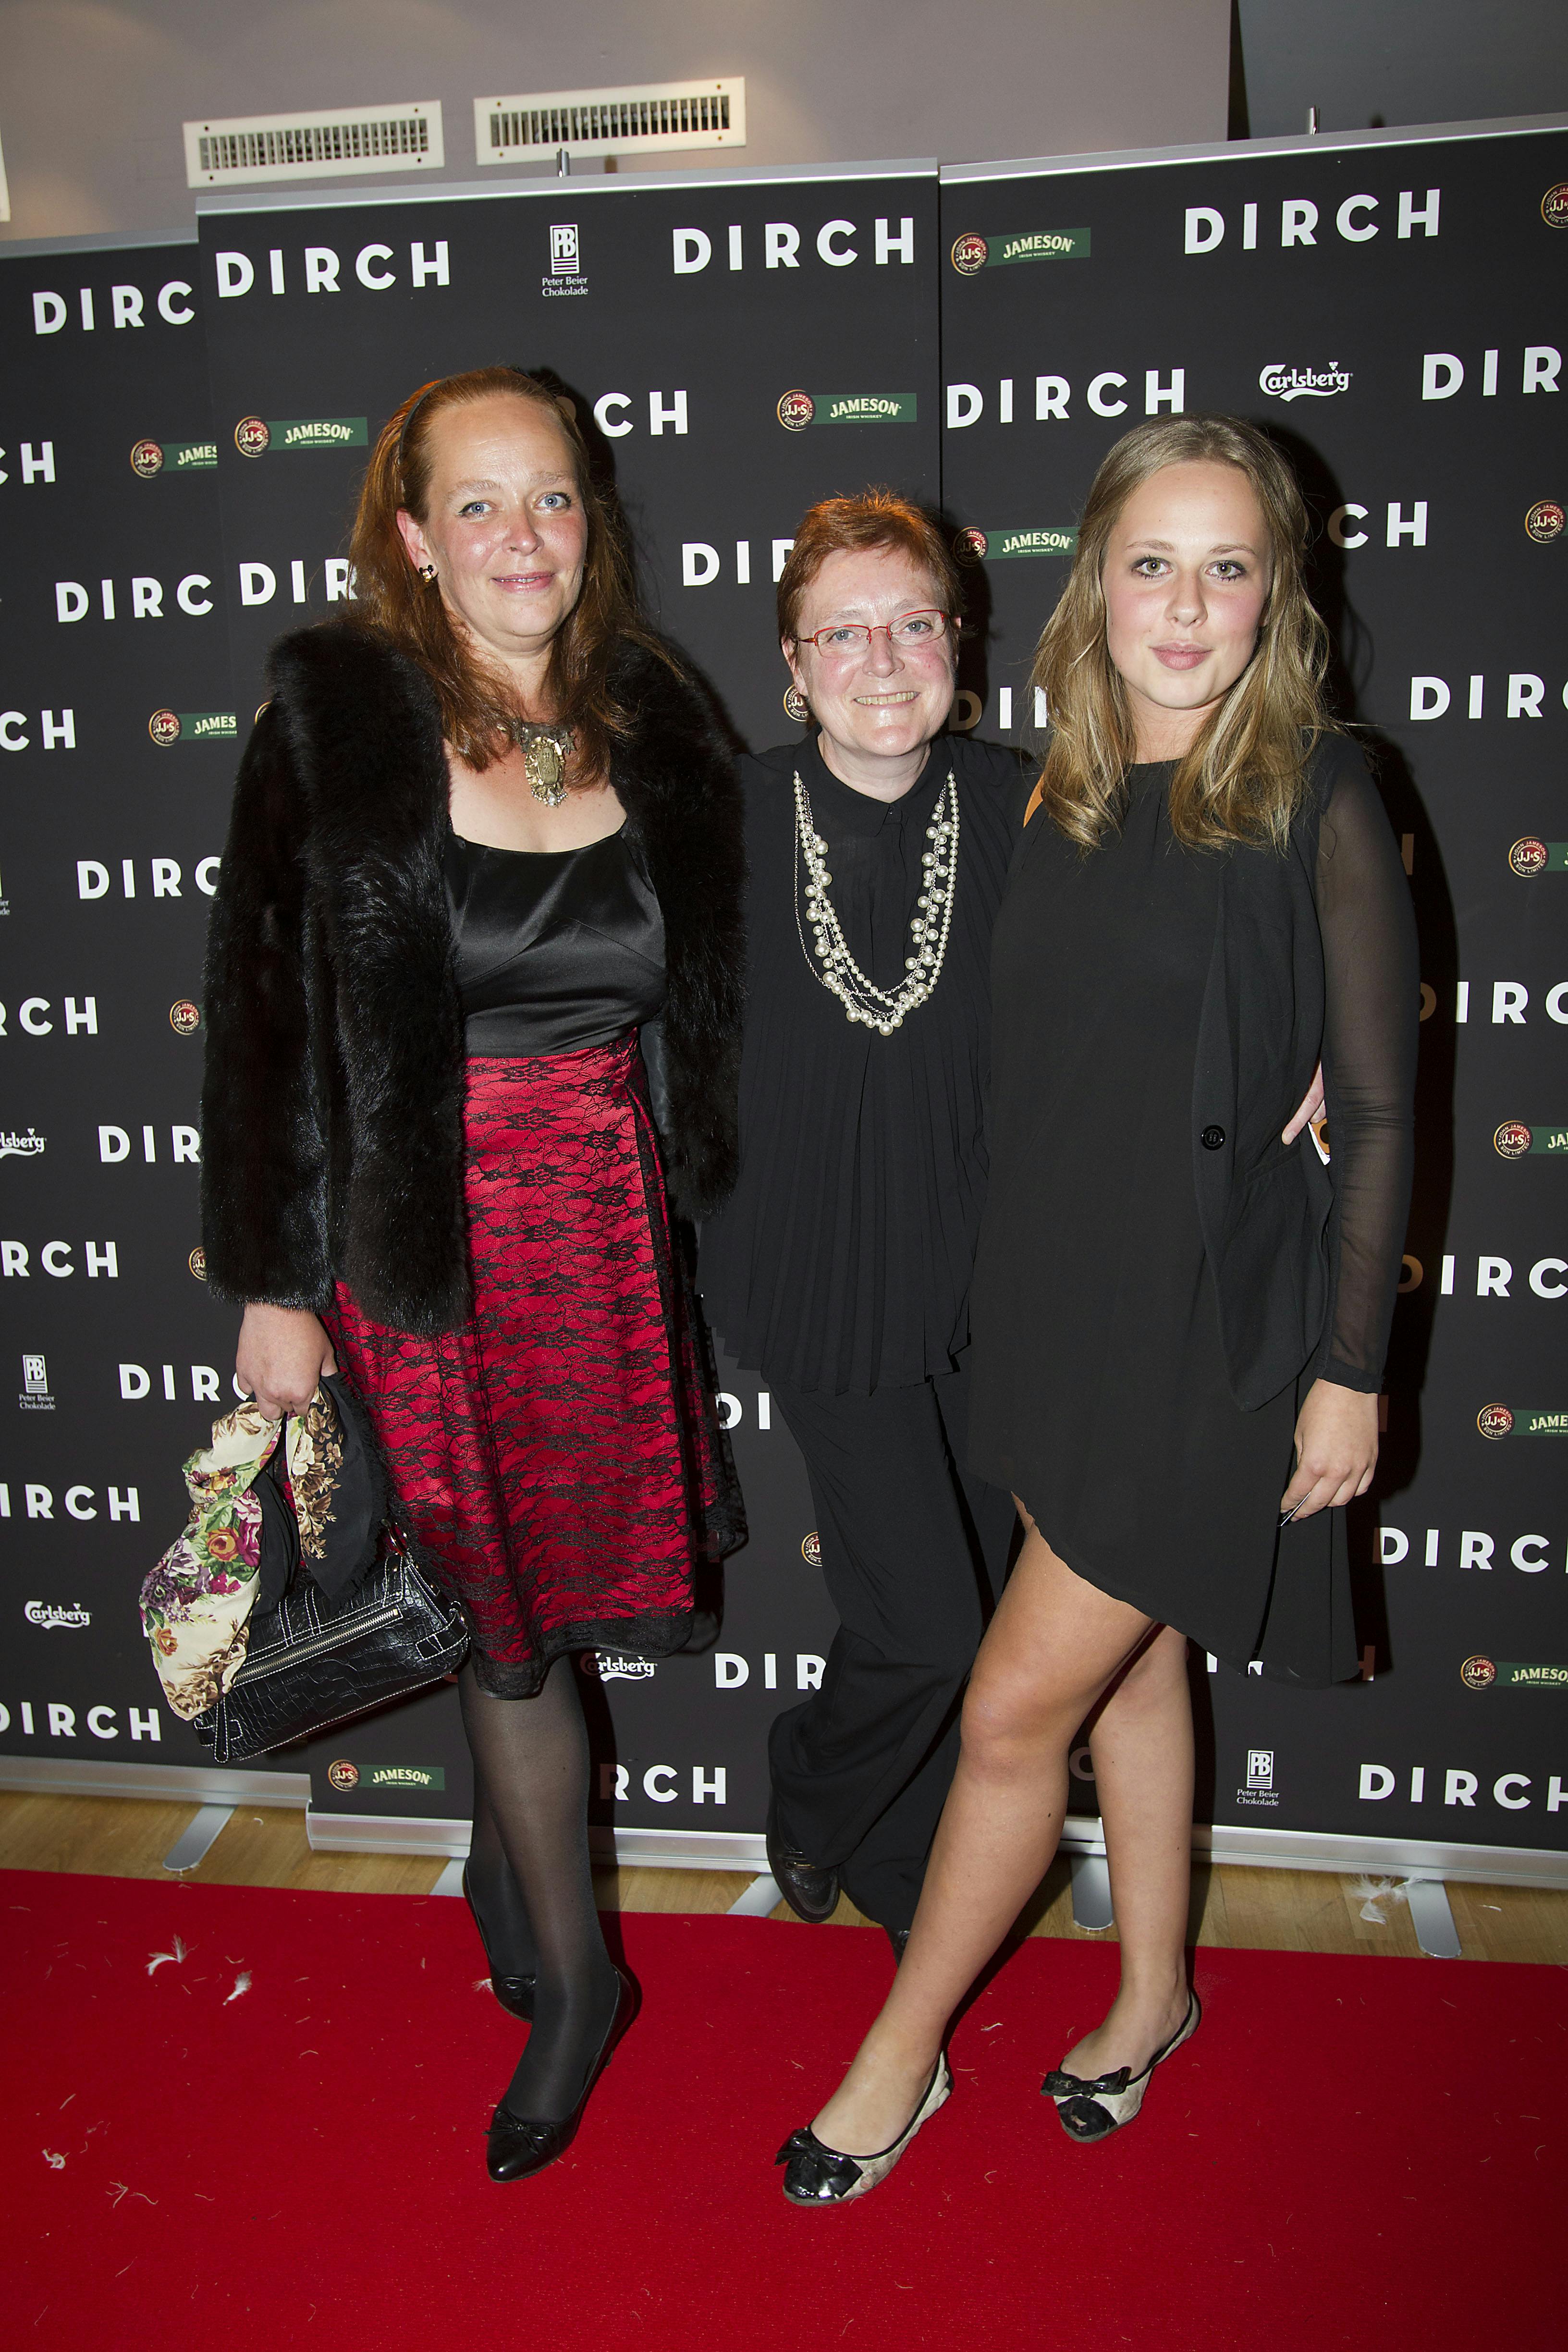 Mathilde Passer med sin mor, Josefine Passer (tv), samt moderens halvsøster Dorte, der for mange år siden flyttede til England, men dog var i Danmark til premieren på filmen "Dirch".